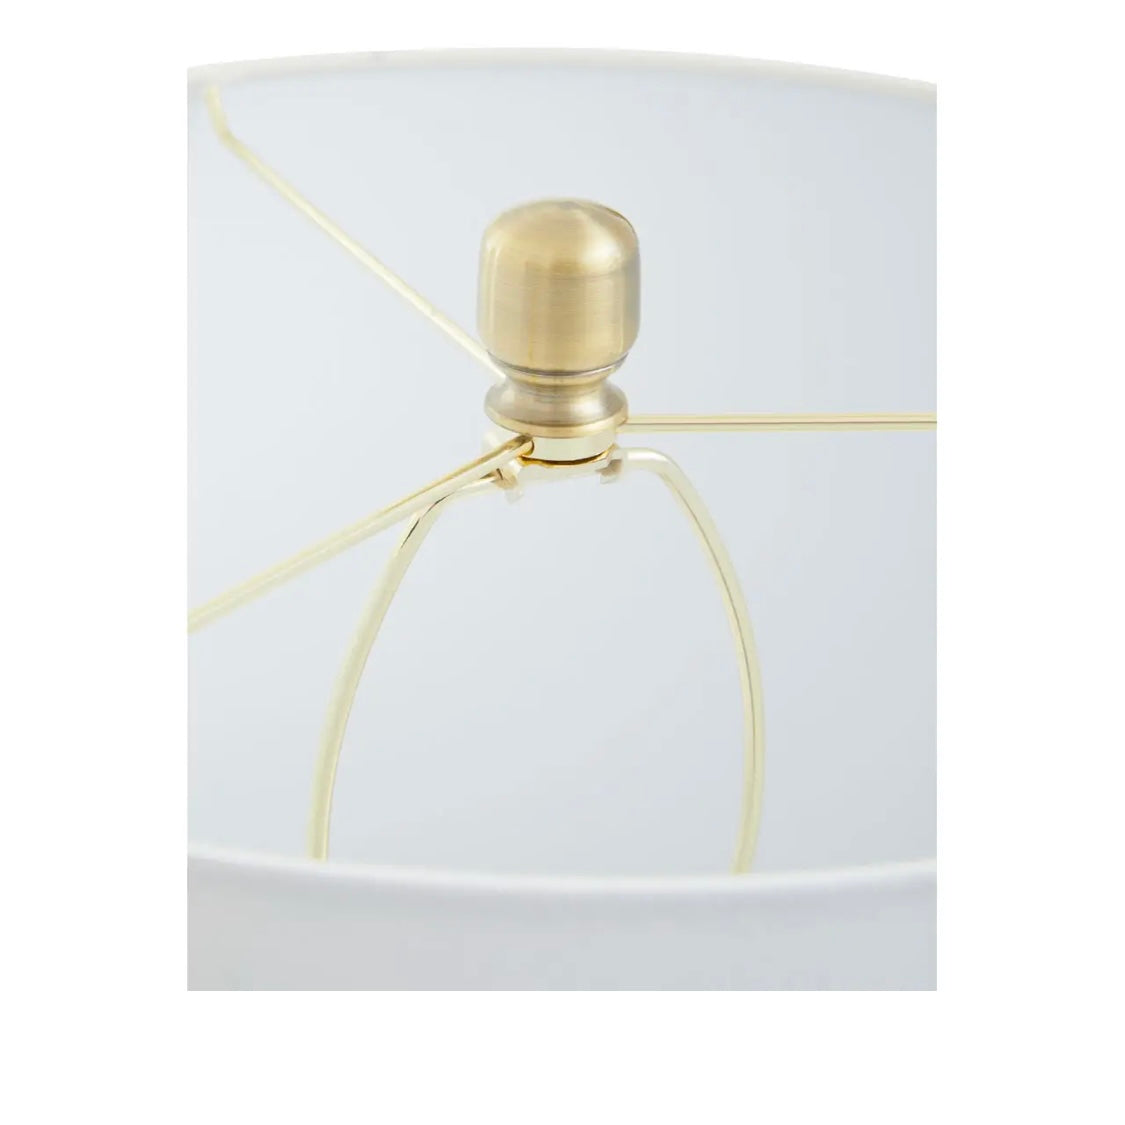 Marble & Brush Brass Table Lamp